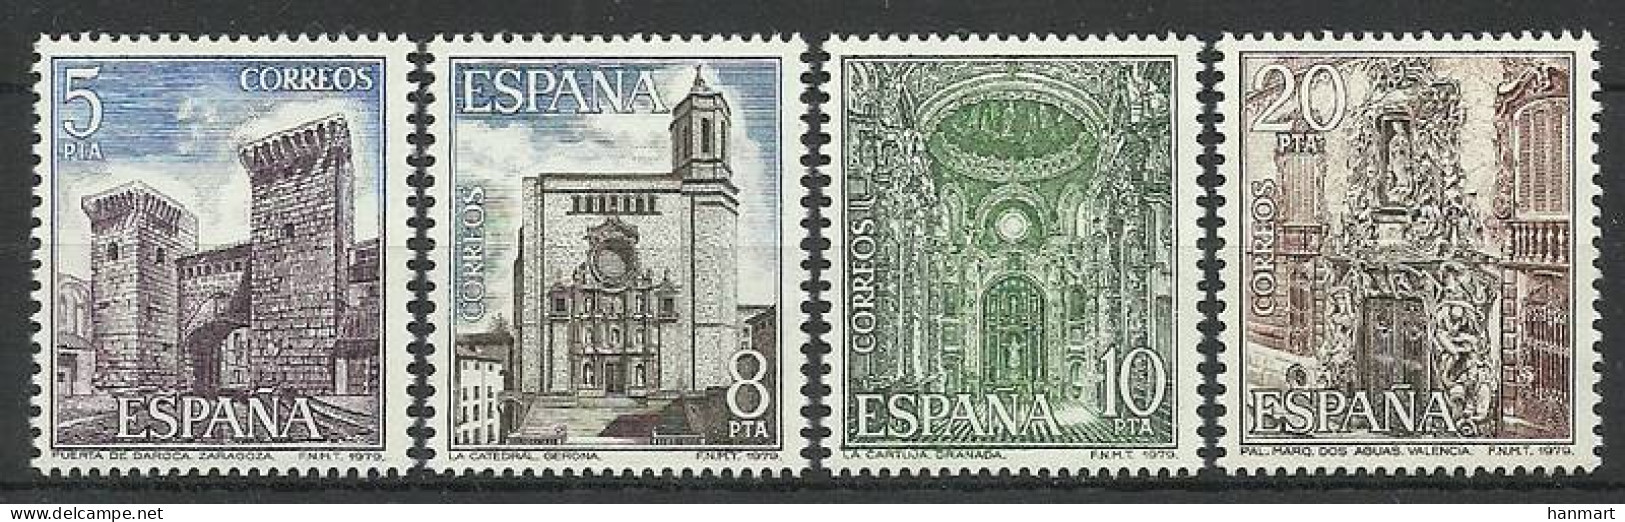 Spain 1979 Mi 2419-2422 MNH  (ZE1 SPN2419-2422) - Scultura